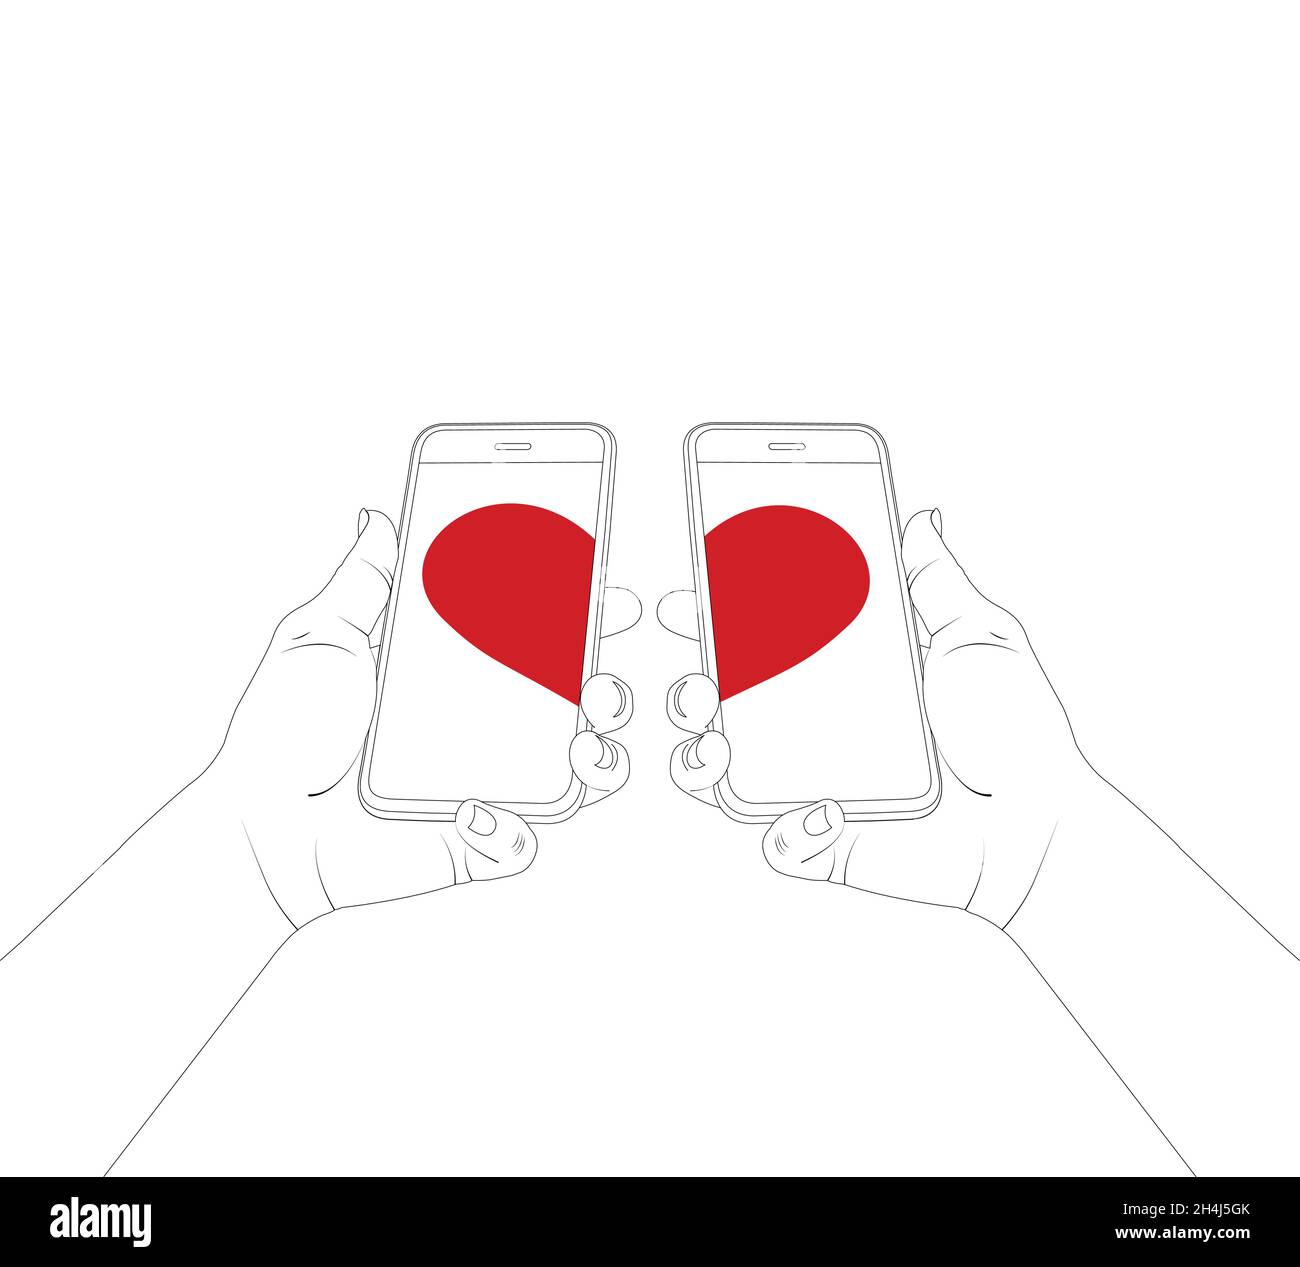 Online-Dating, Flirt online, Flirten mit dem Telefon, Liebe, romantische Messaging, Vektor Stock Illustration Stock Vektor